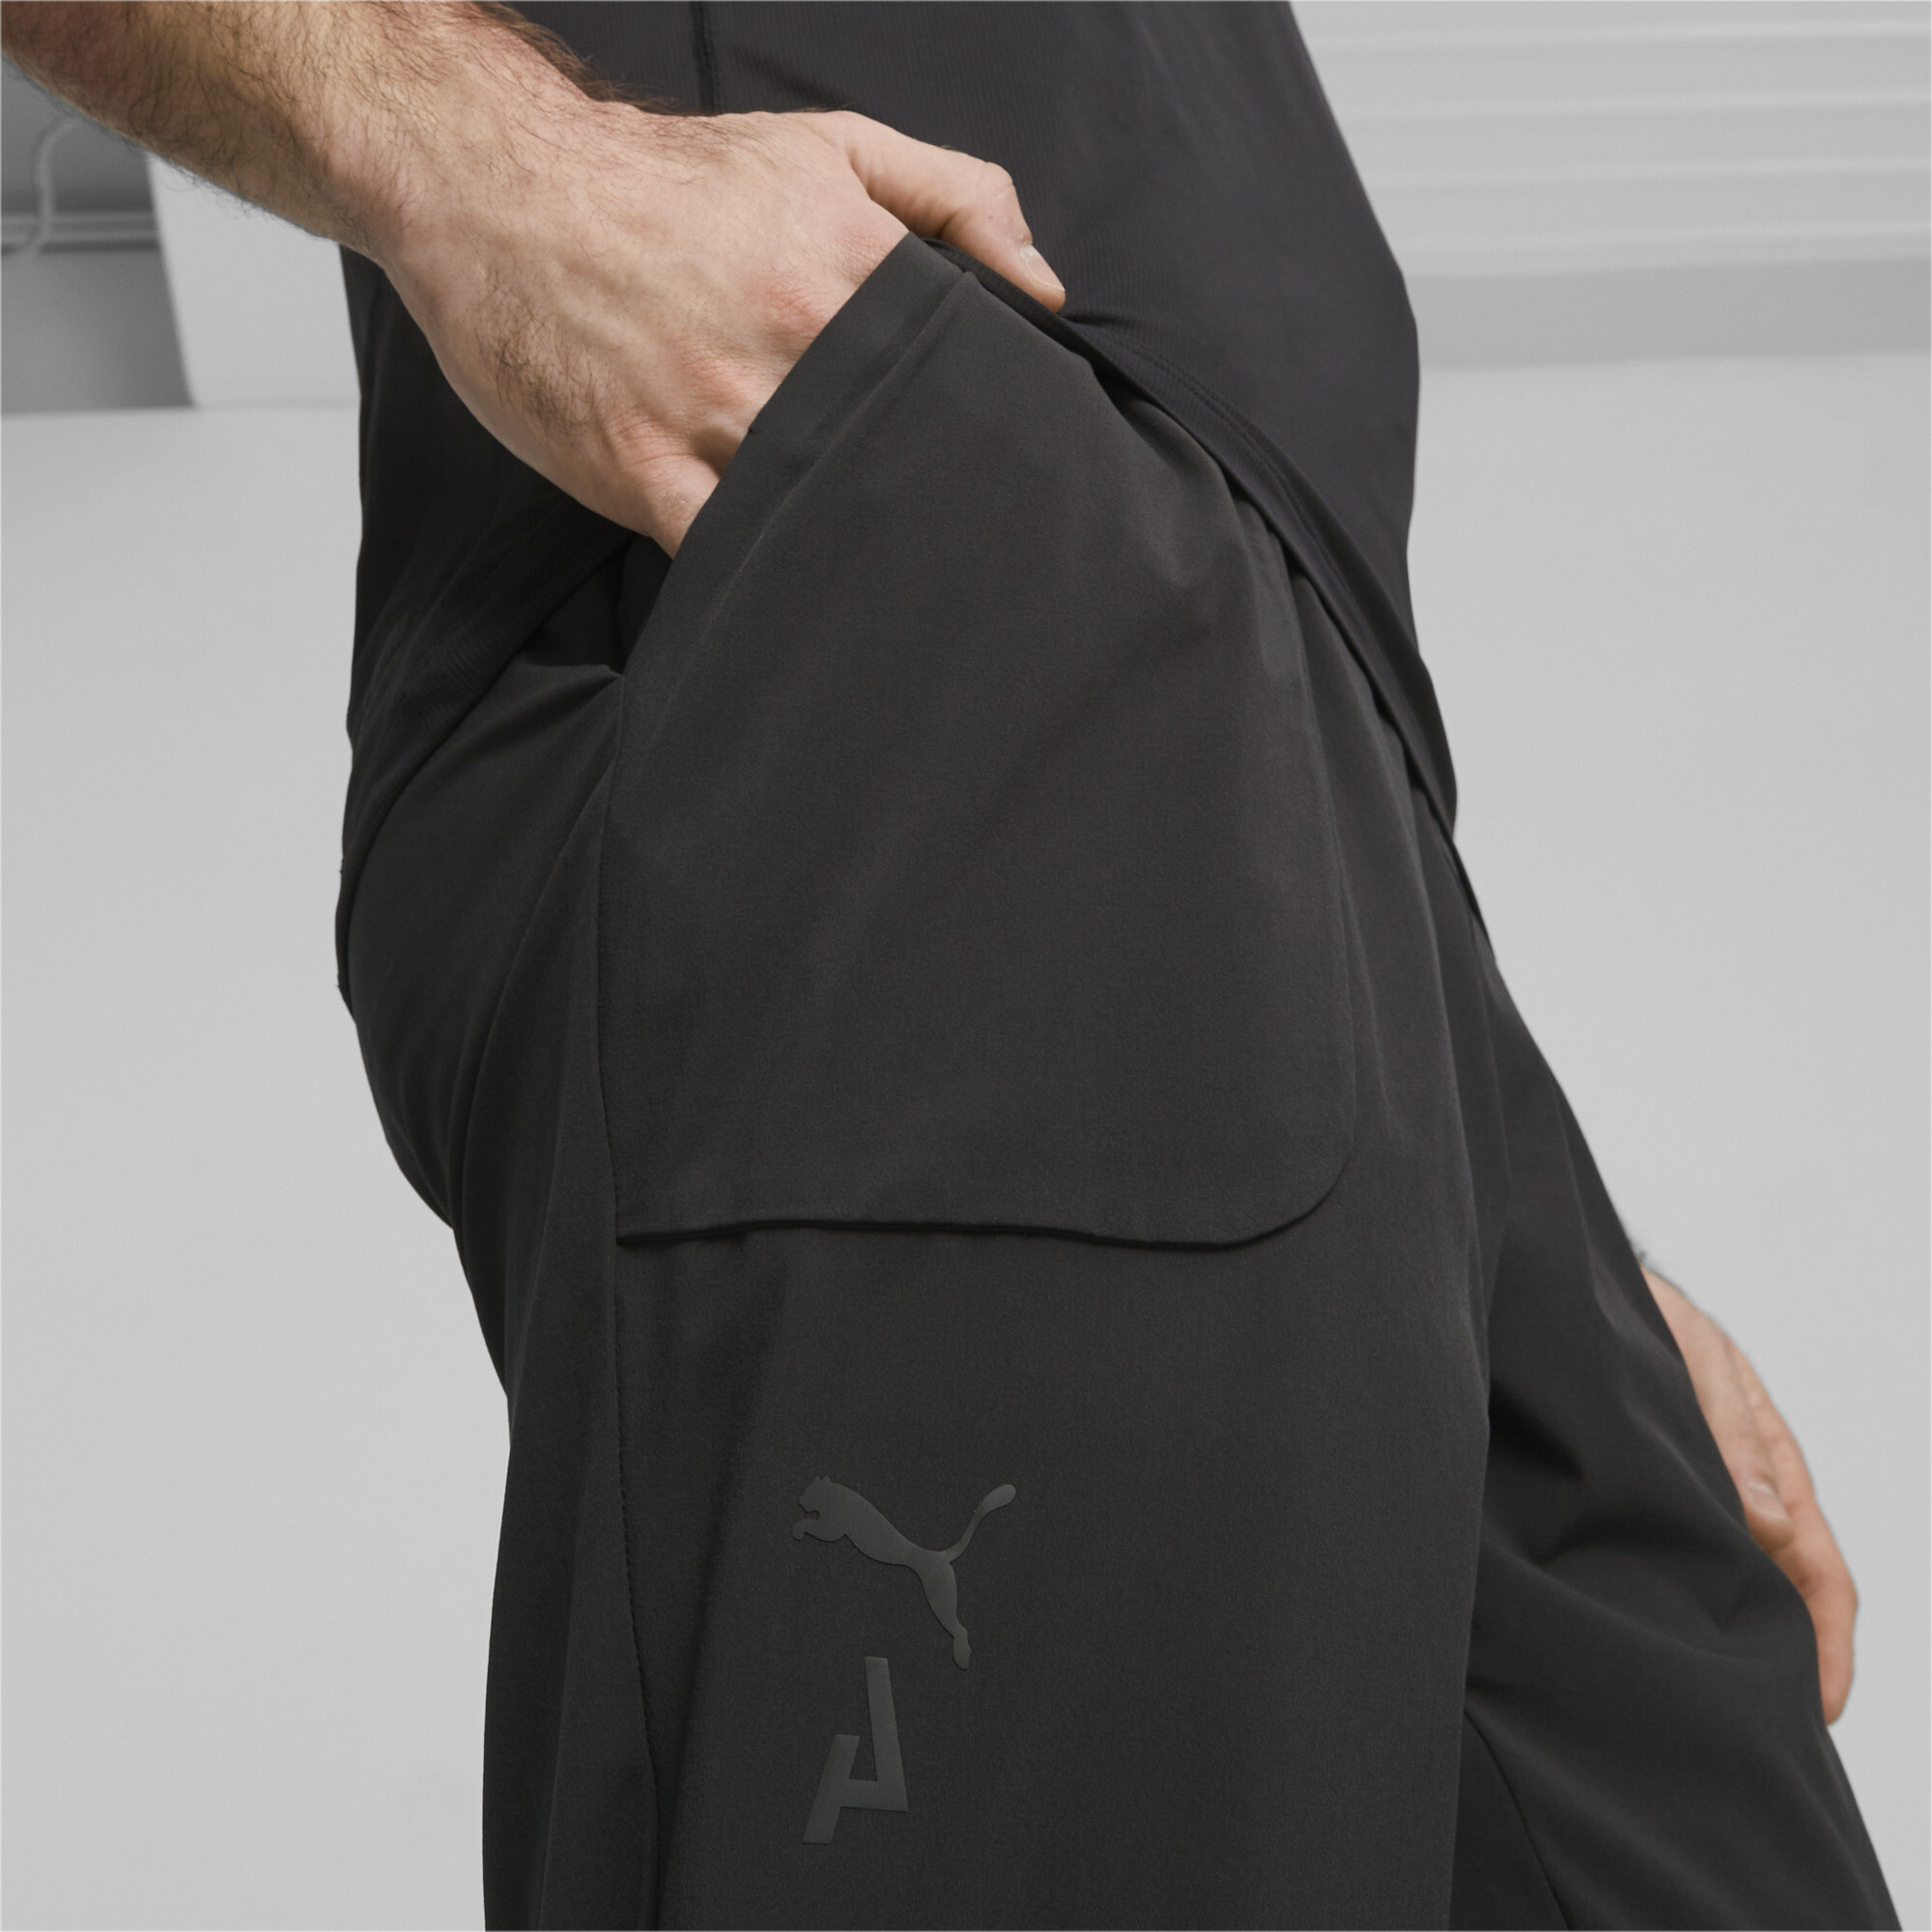 Men's PUMA SEASONS Lightweight Trail Running Pants In Black, Size 2XL